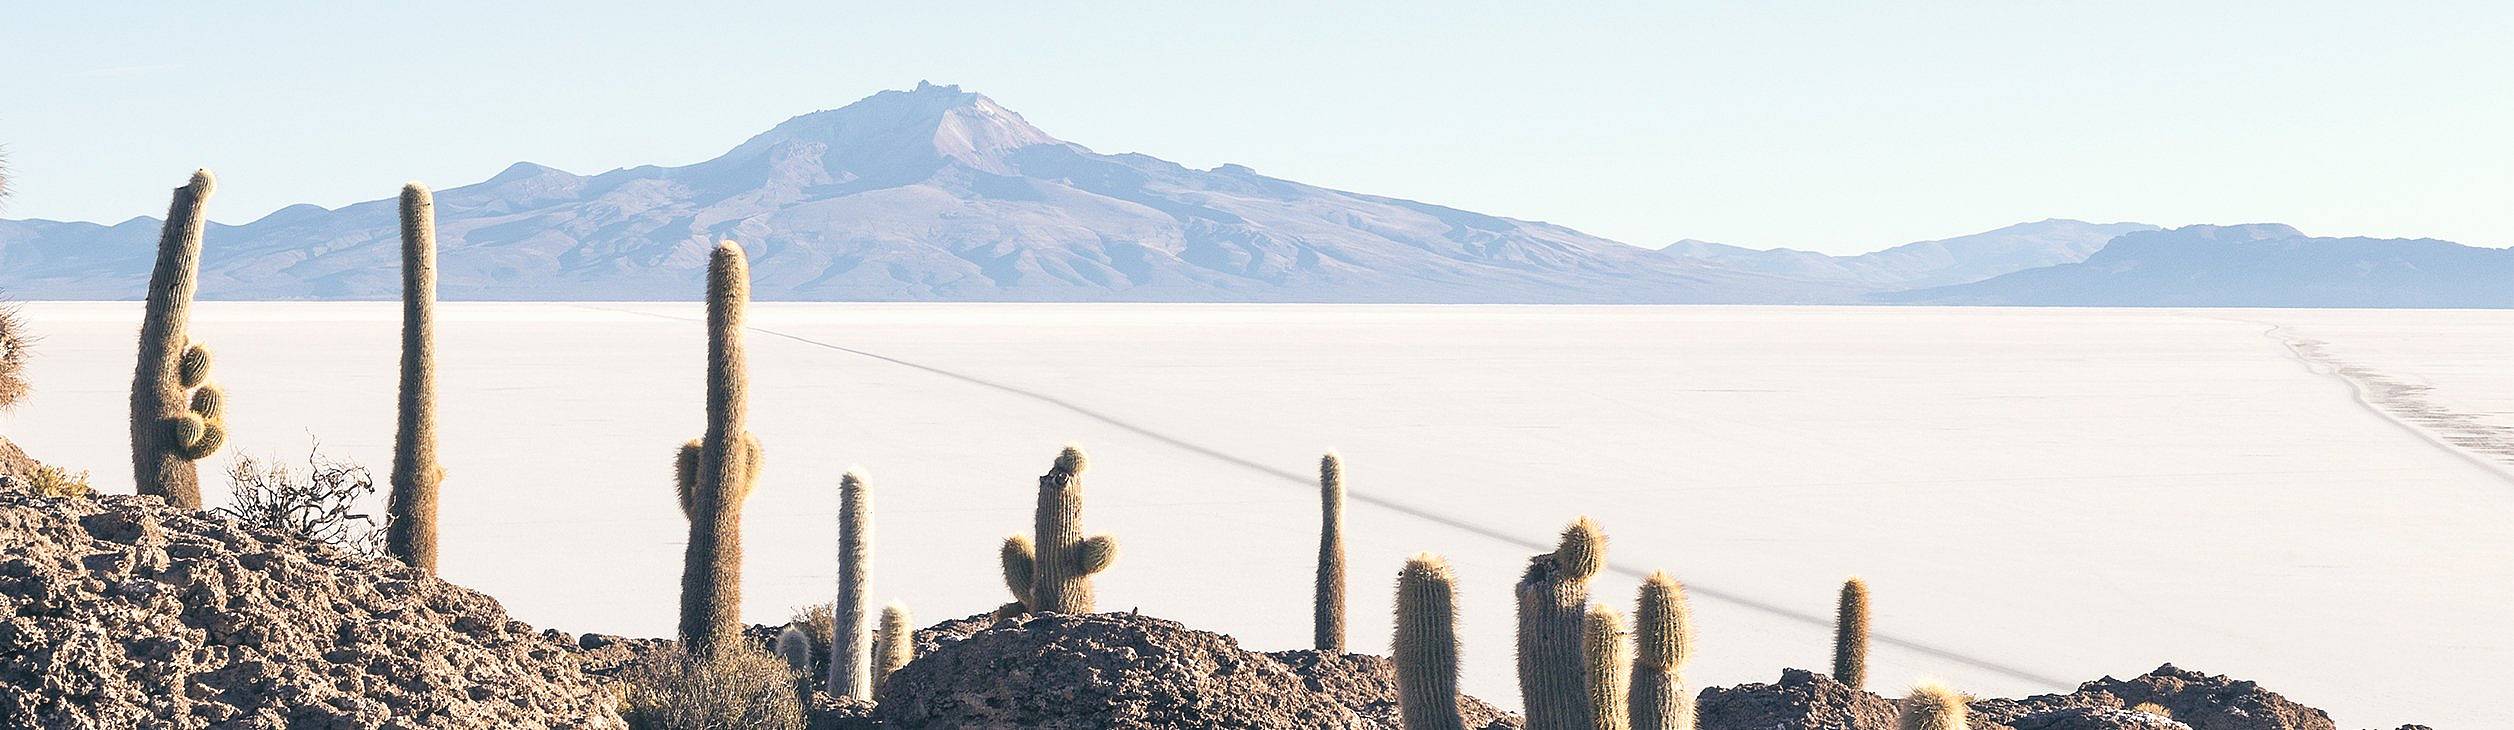 Crea tu viaje a Bolivia en primavera 100% a medida